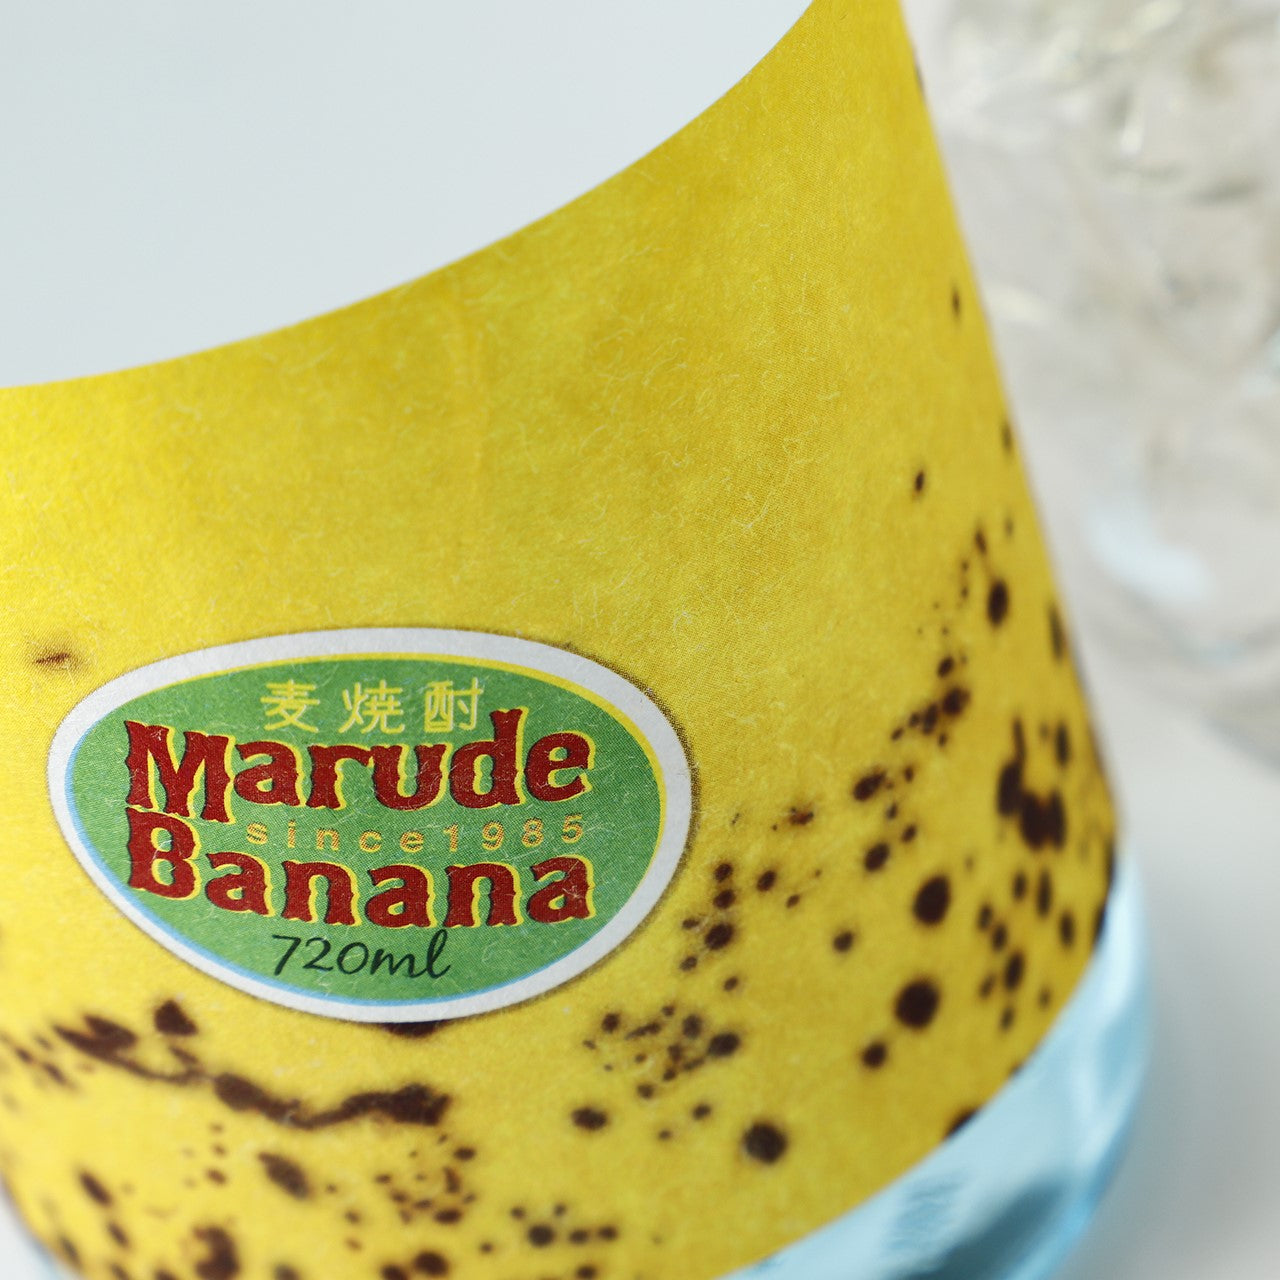 Marude Banana